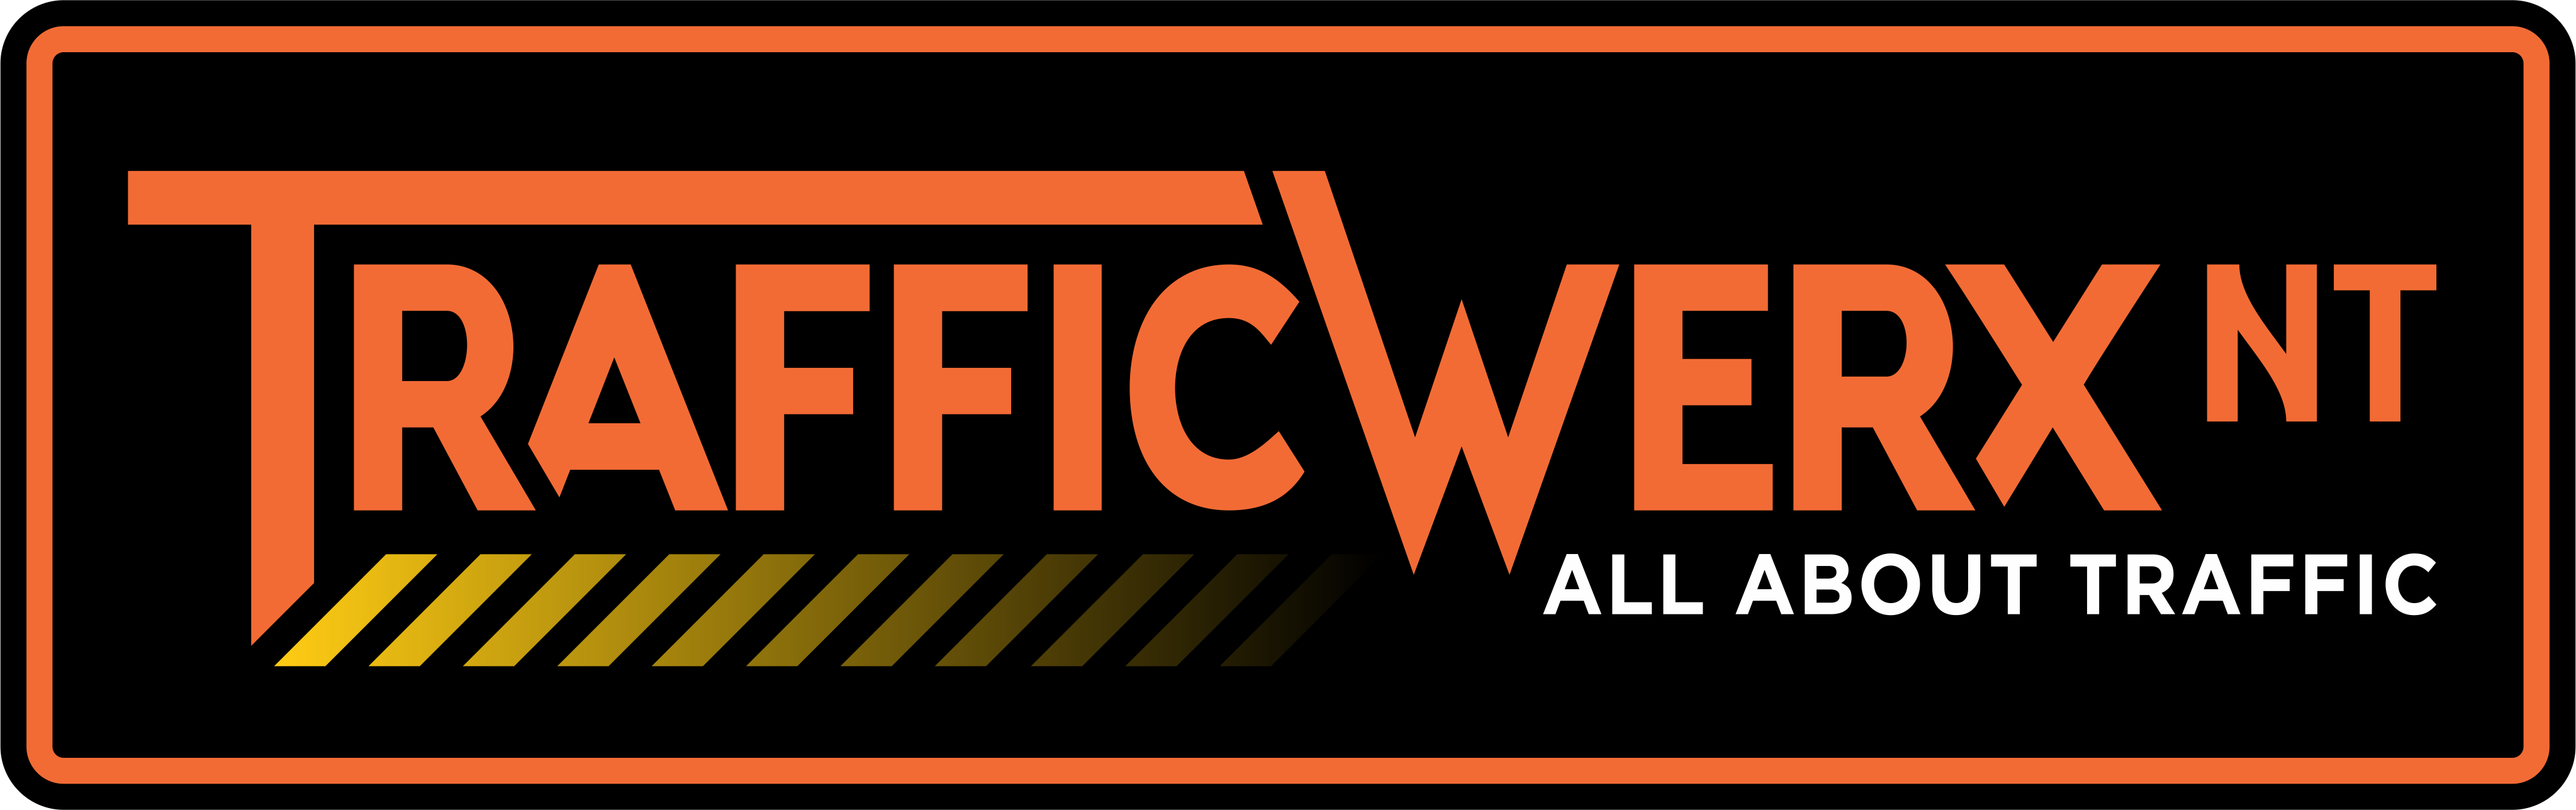 Trafficwerx NT logo